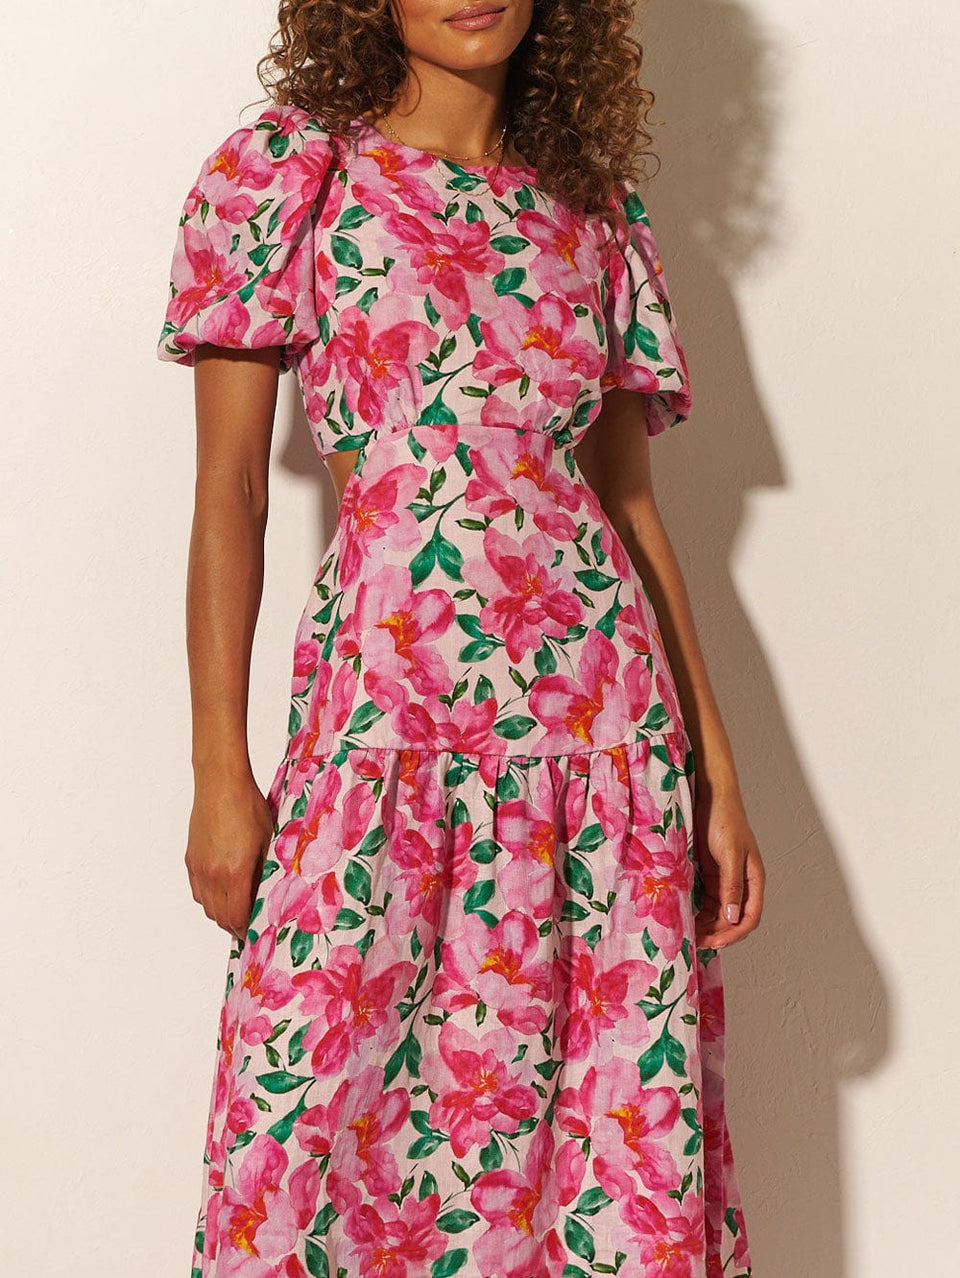 KIVARI Antonia Maxi Dress | Model wearing Pink and Green Floral Dress